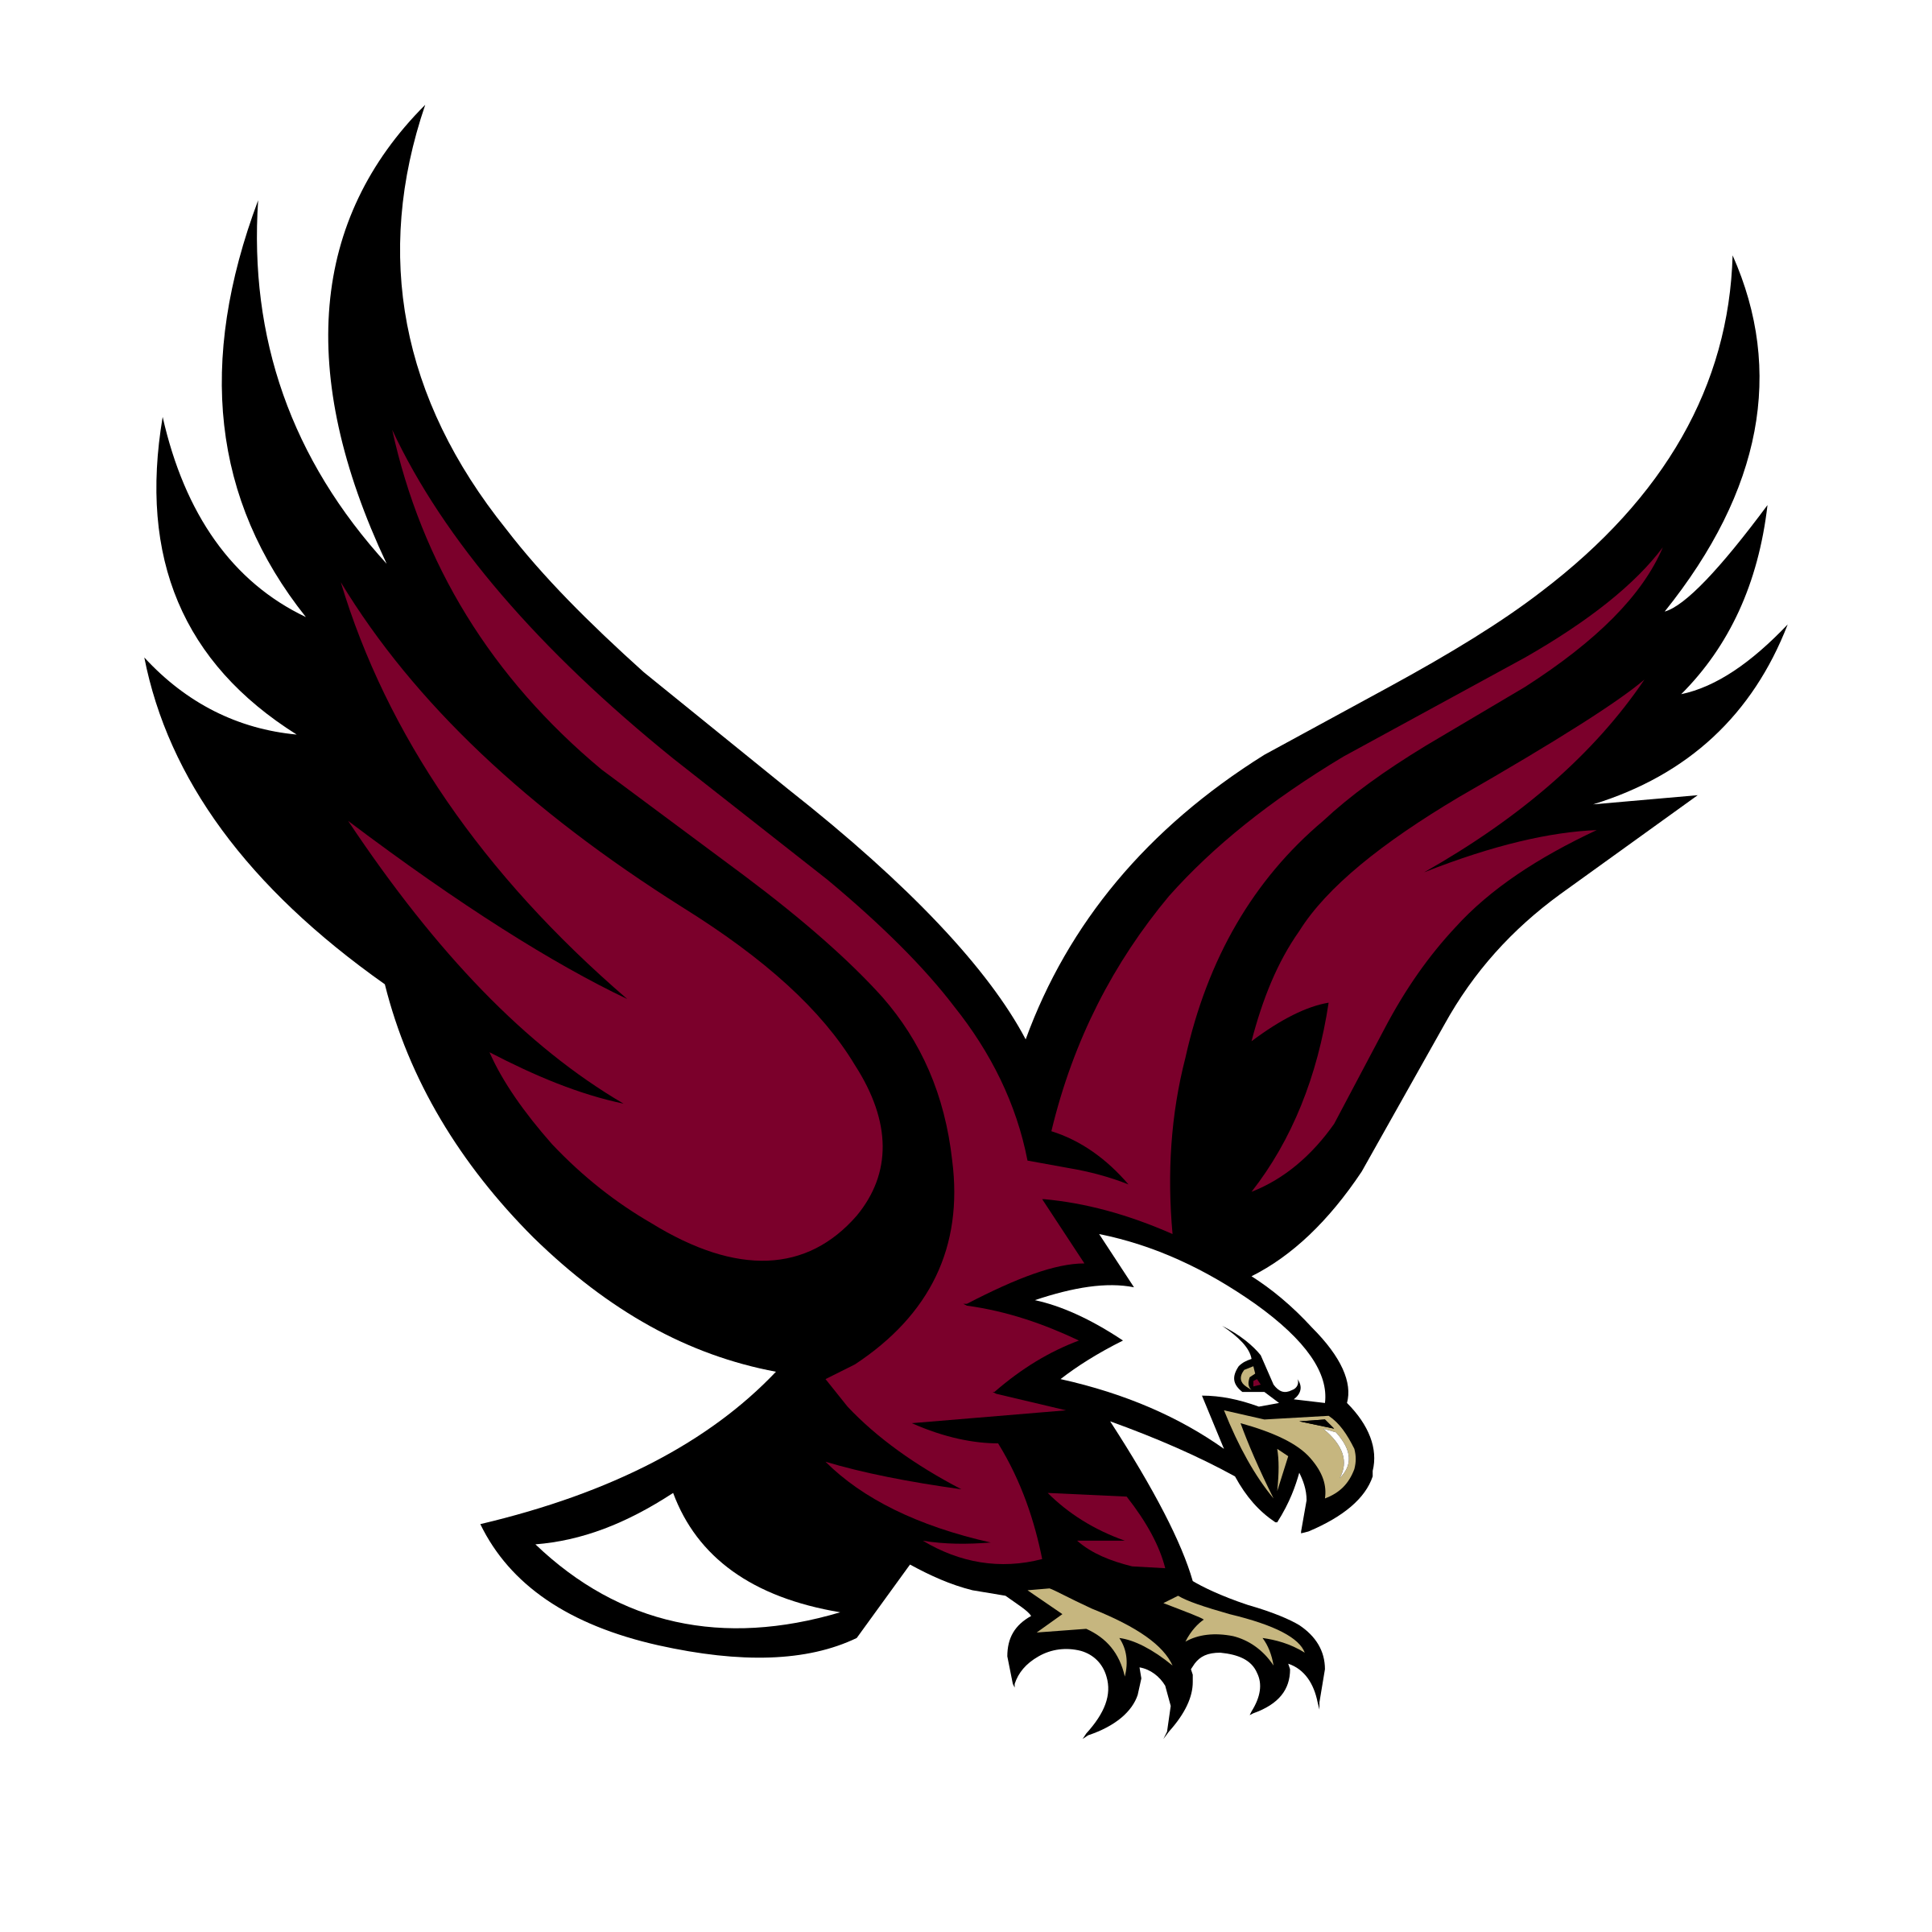 Free Eagles Logo Png, Download Free Eagles Logo Png png images, Free